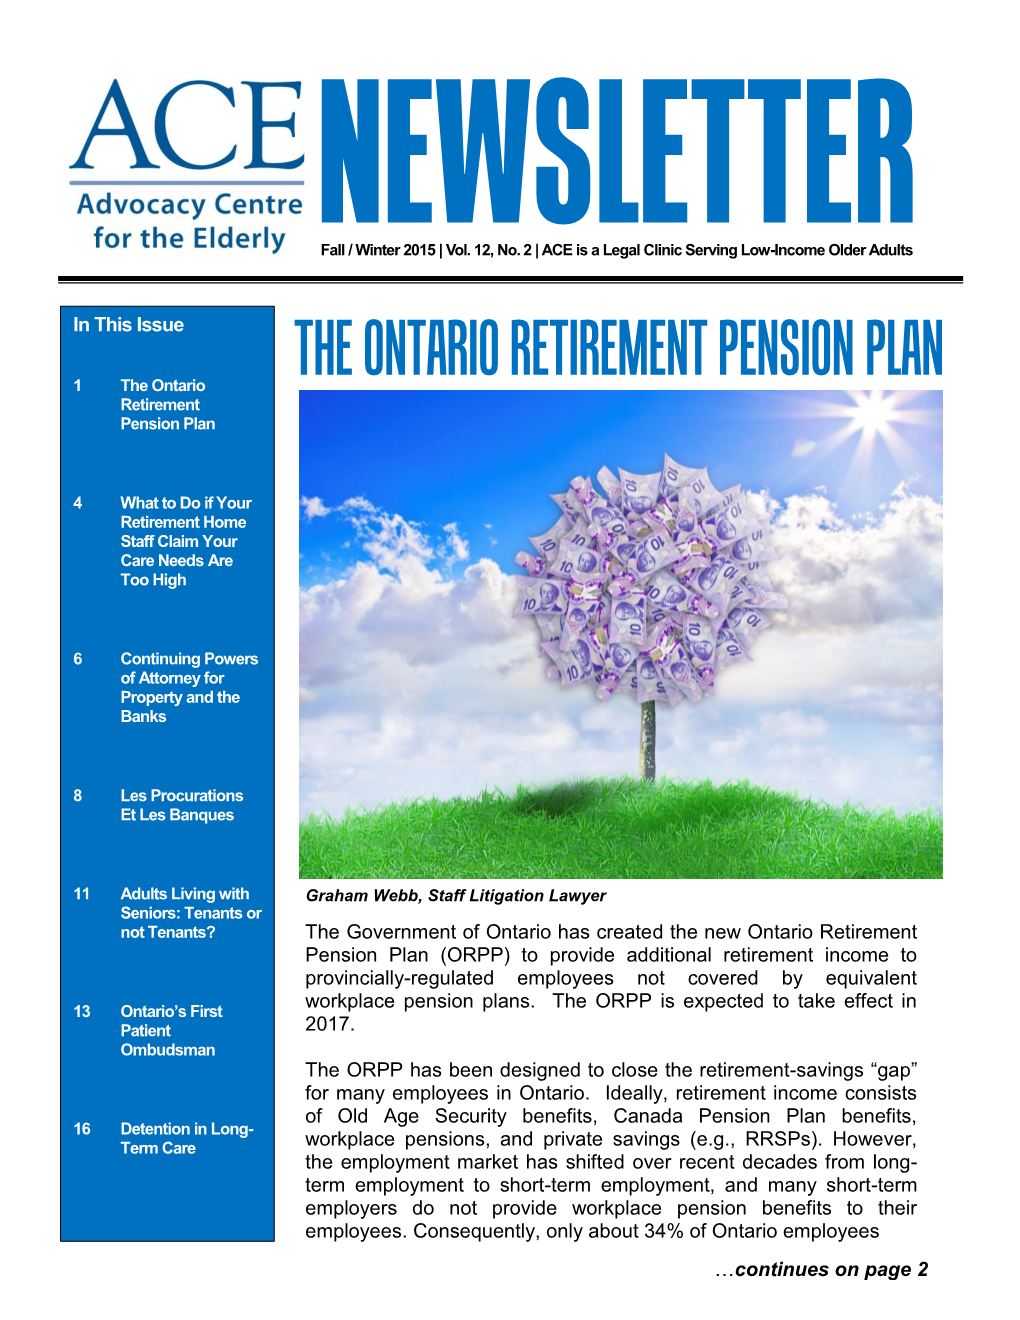 The Ontario Retirement Pensionplan